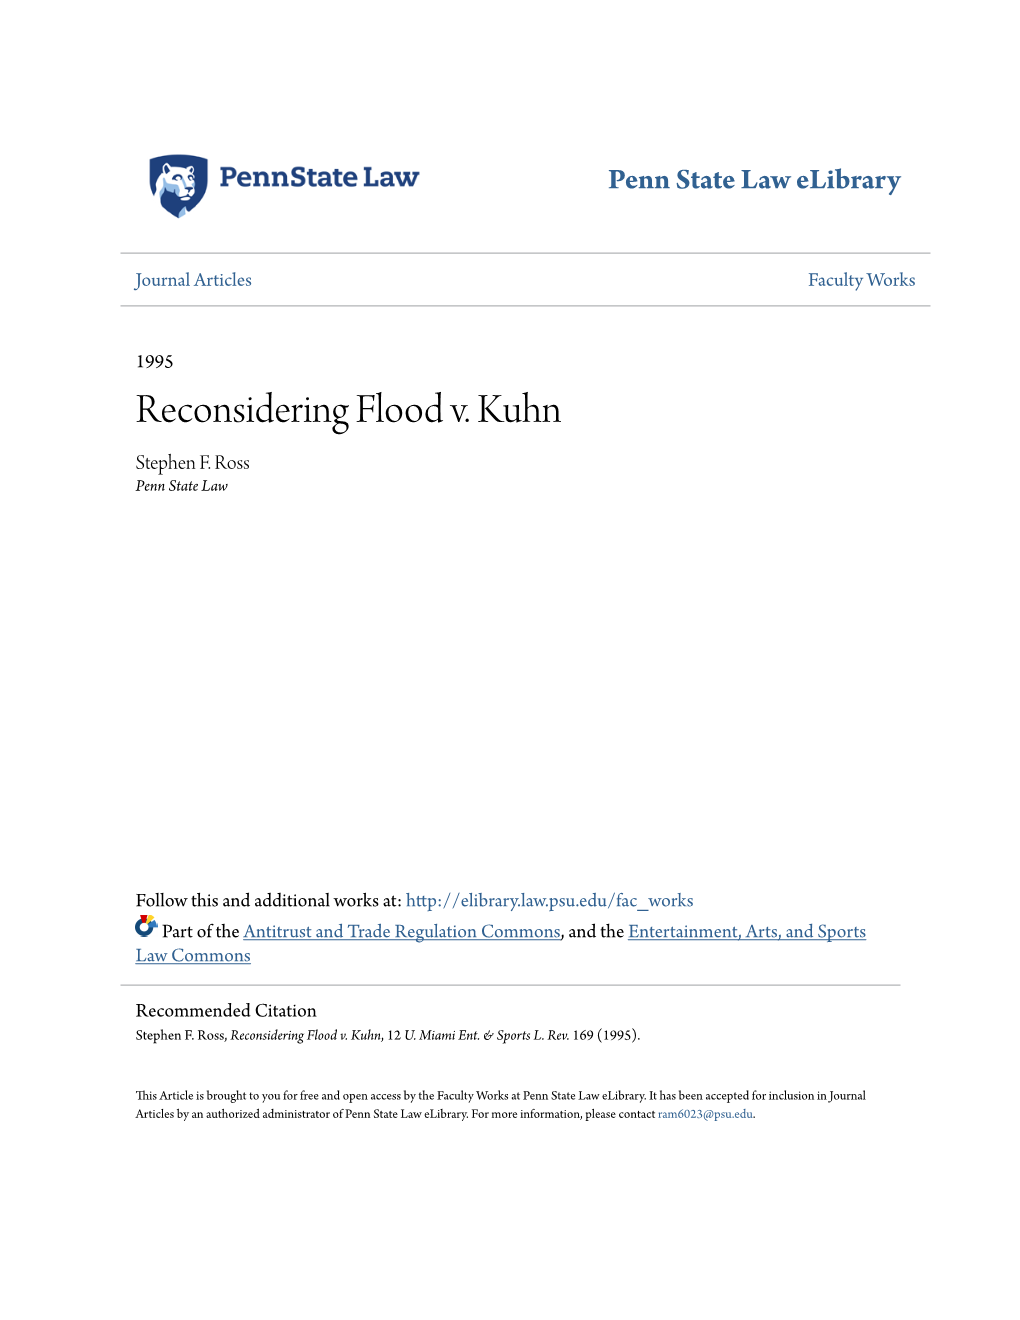 Reconsidering Flood V. Kuhn Stephen F